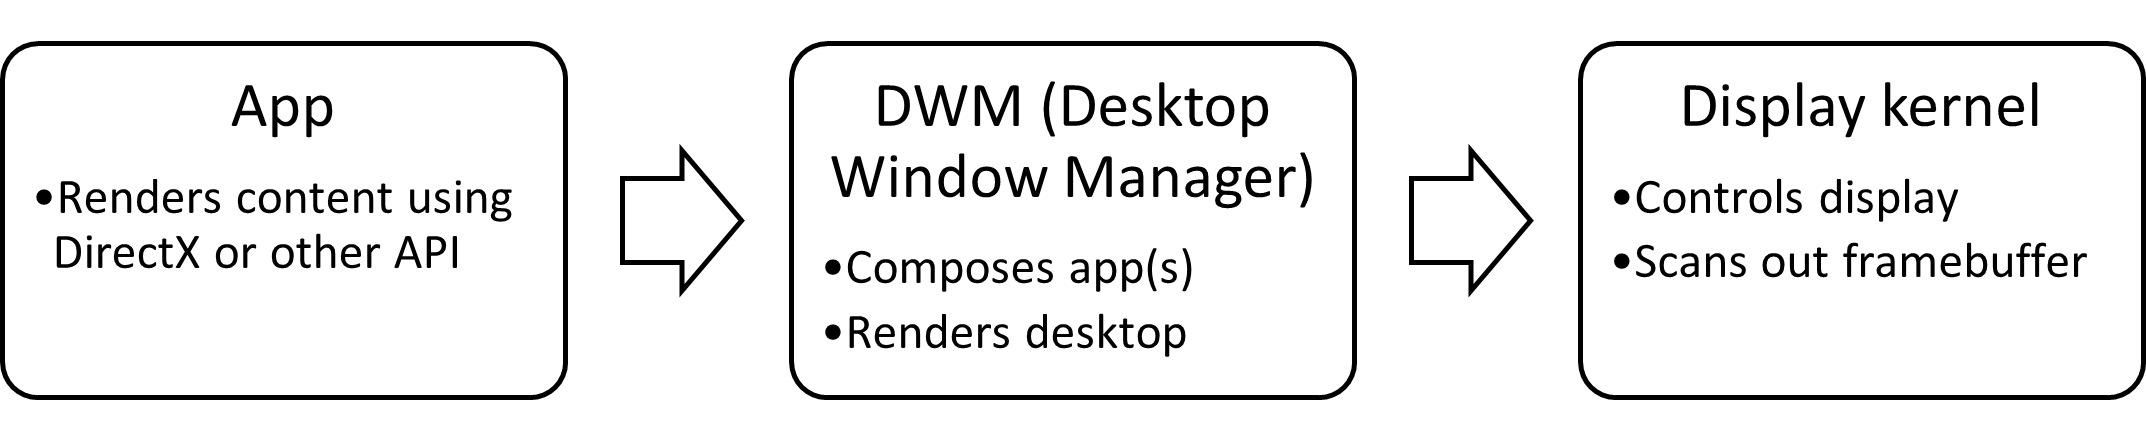 block diagram of Windows graphics stack: app to DWM to display kernel